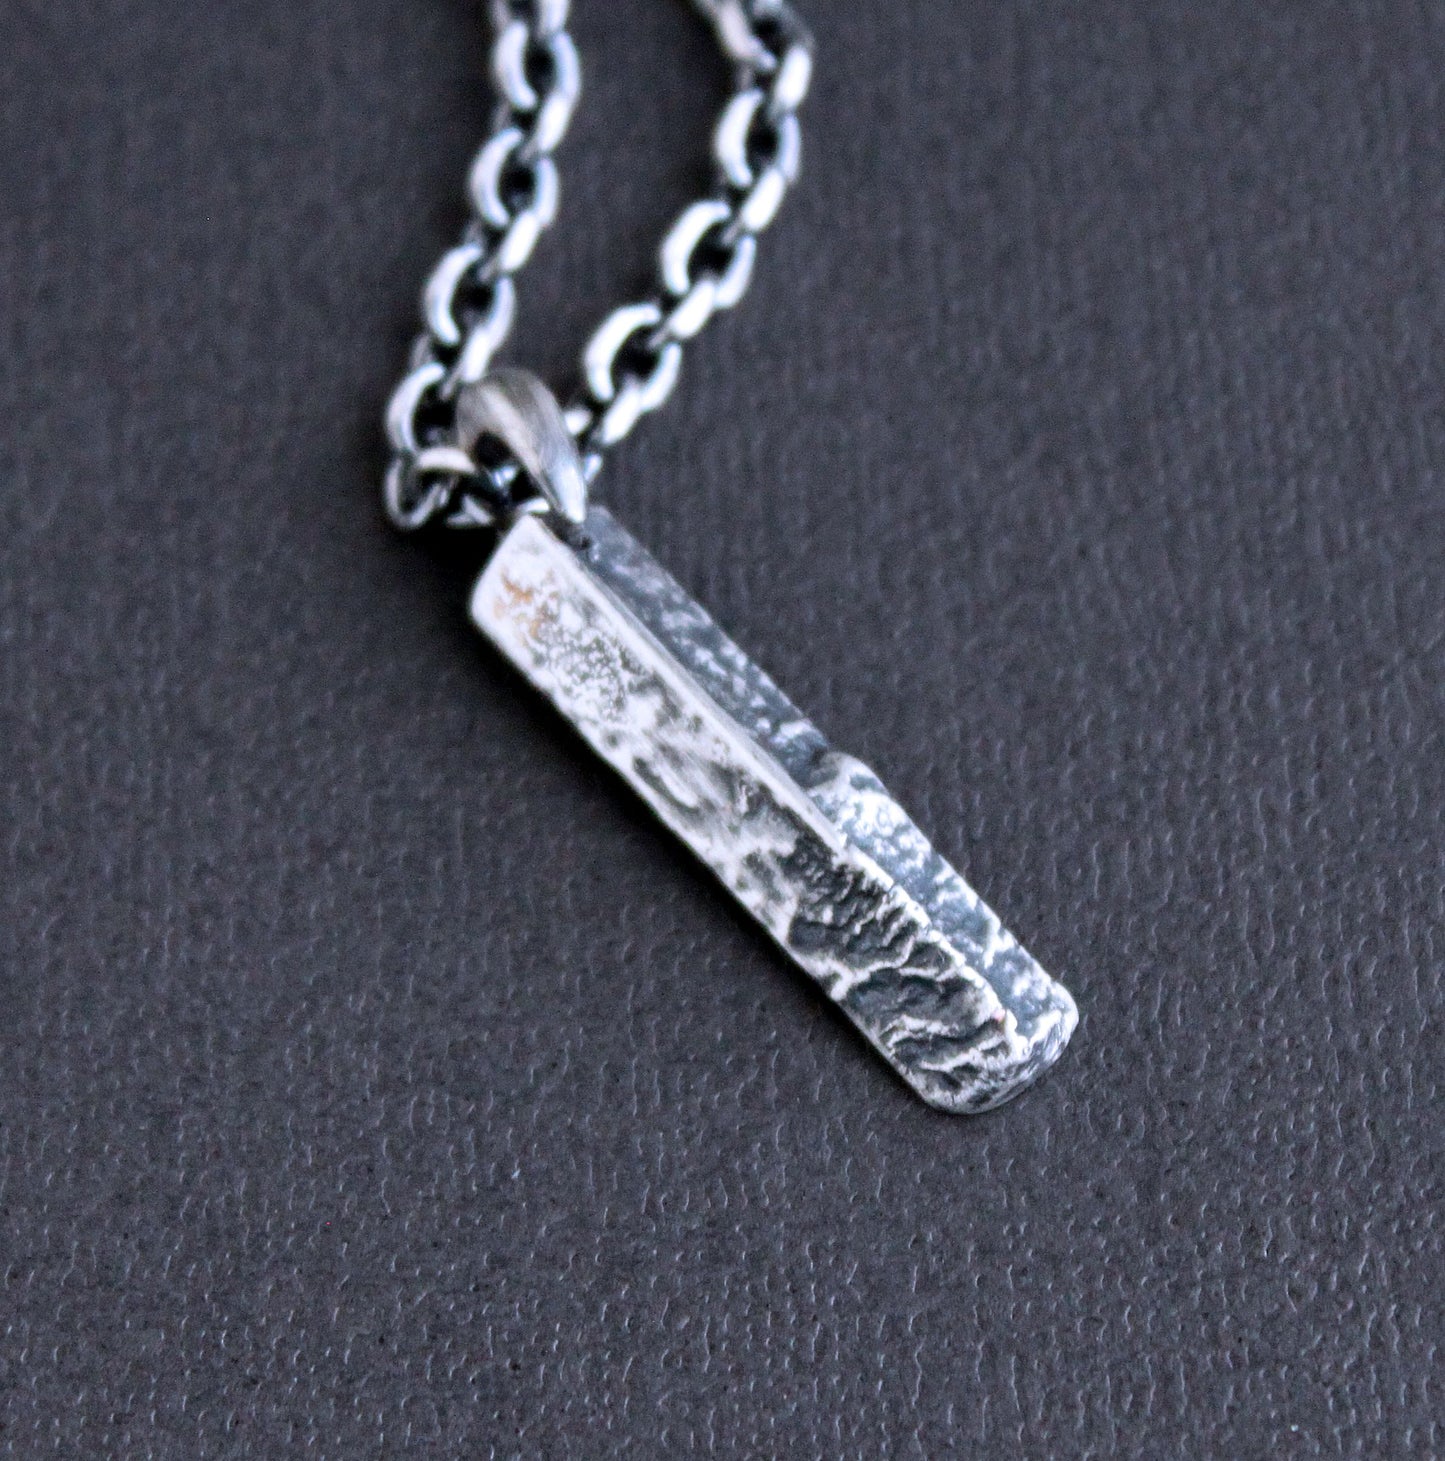 Small Rustic Silver Pendant Necklace